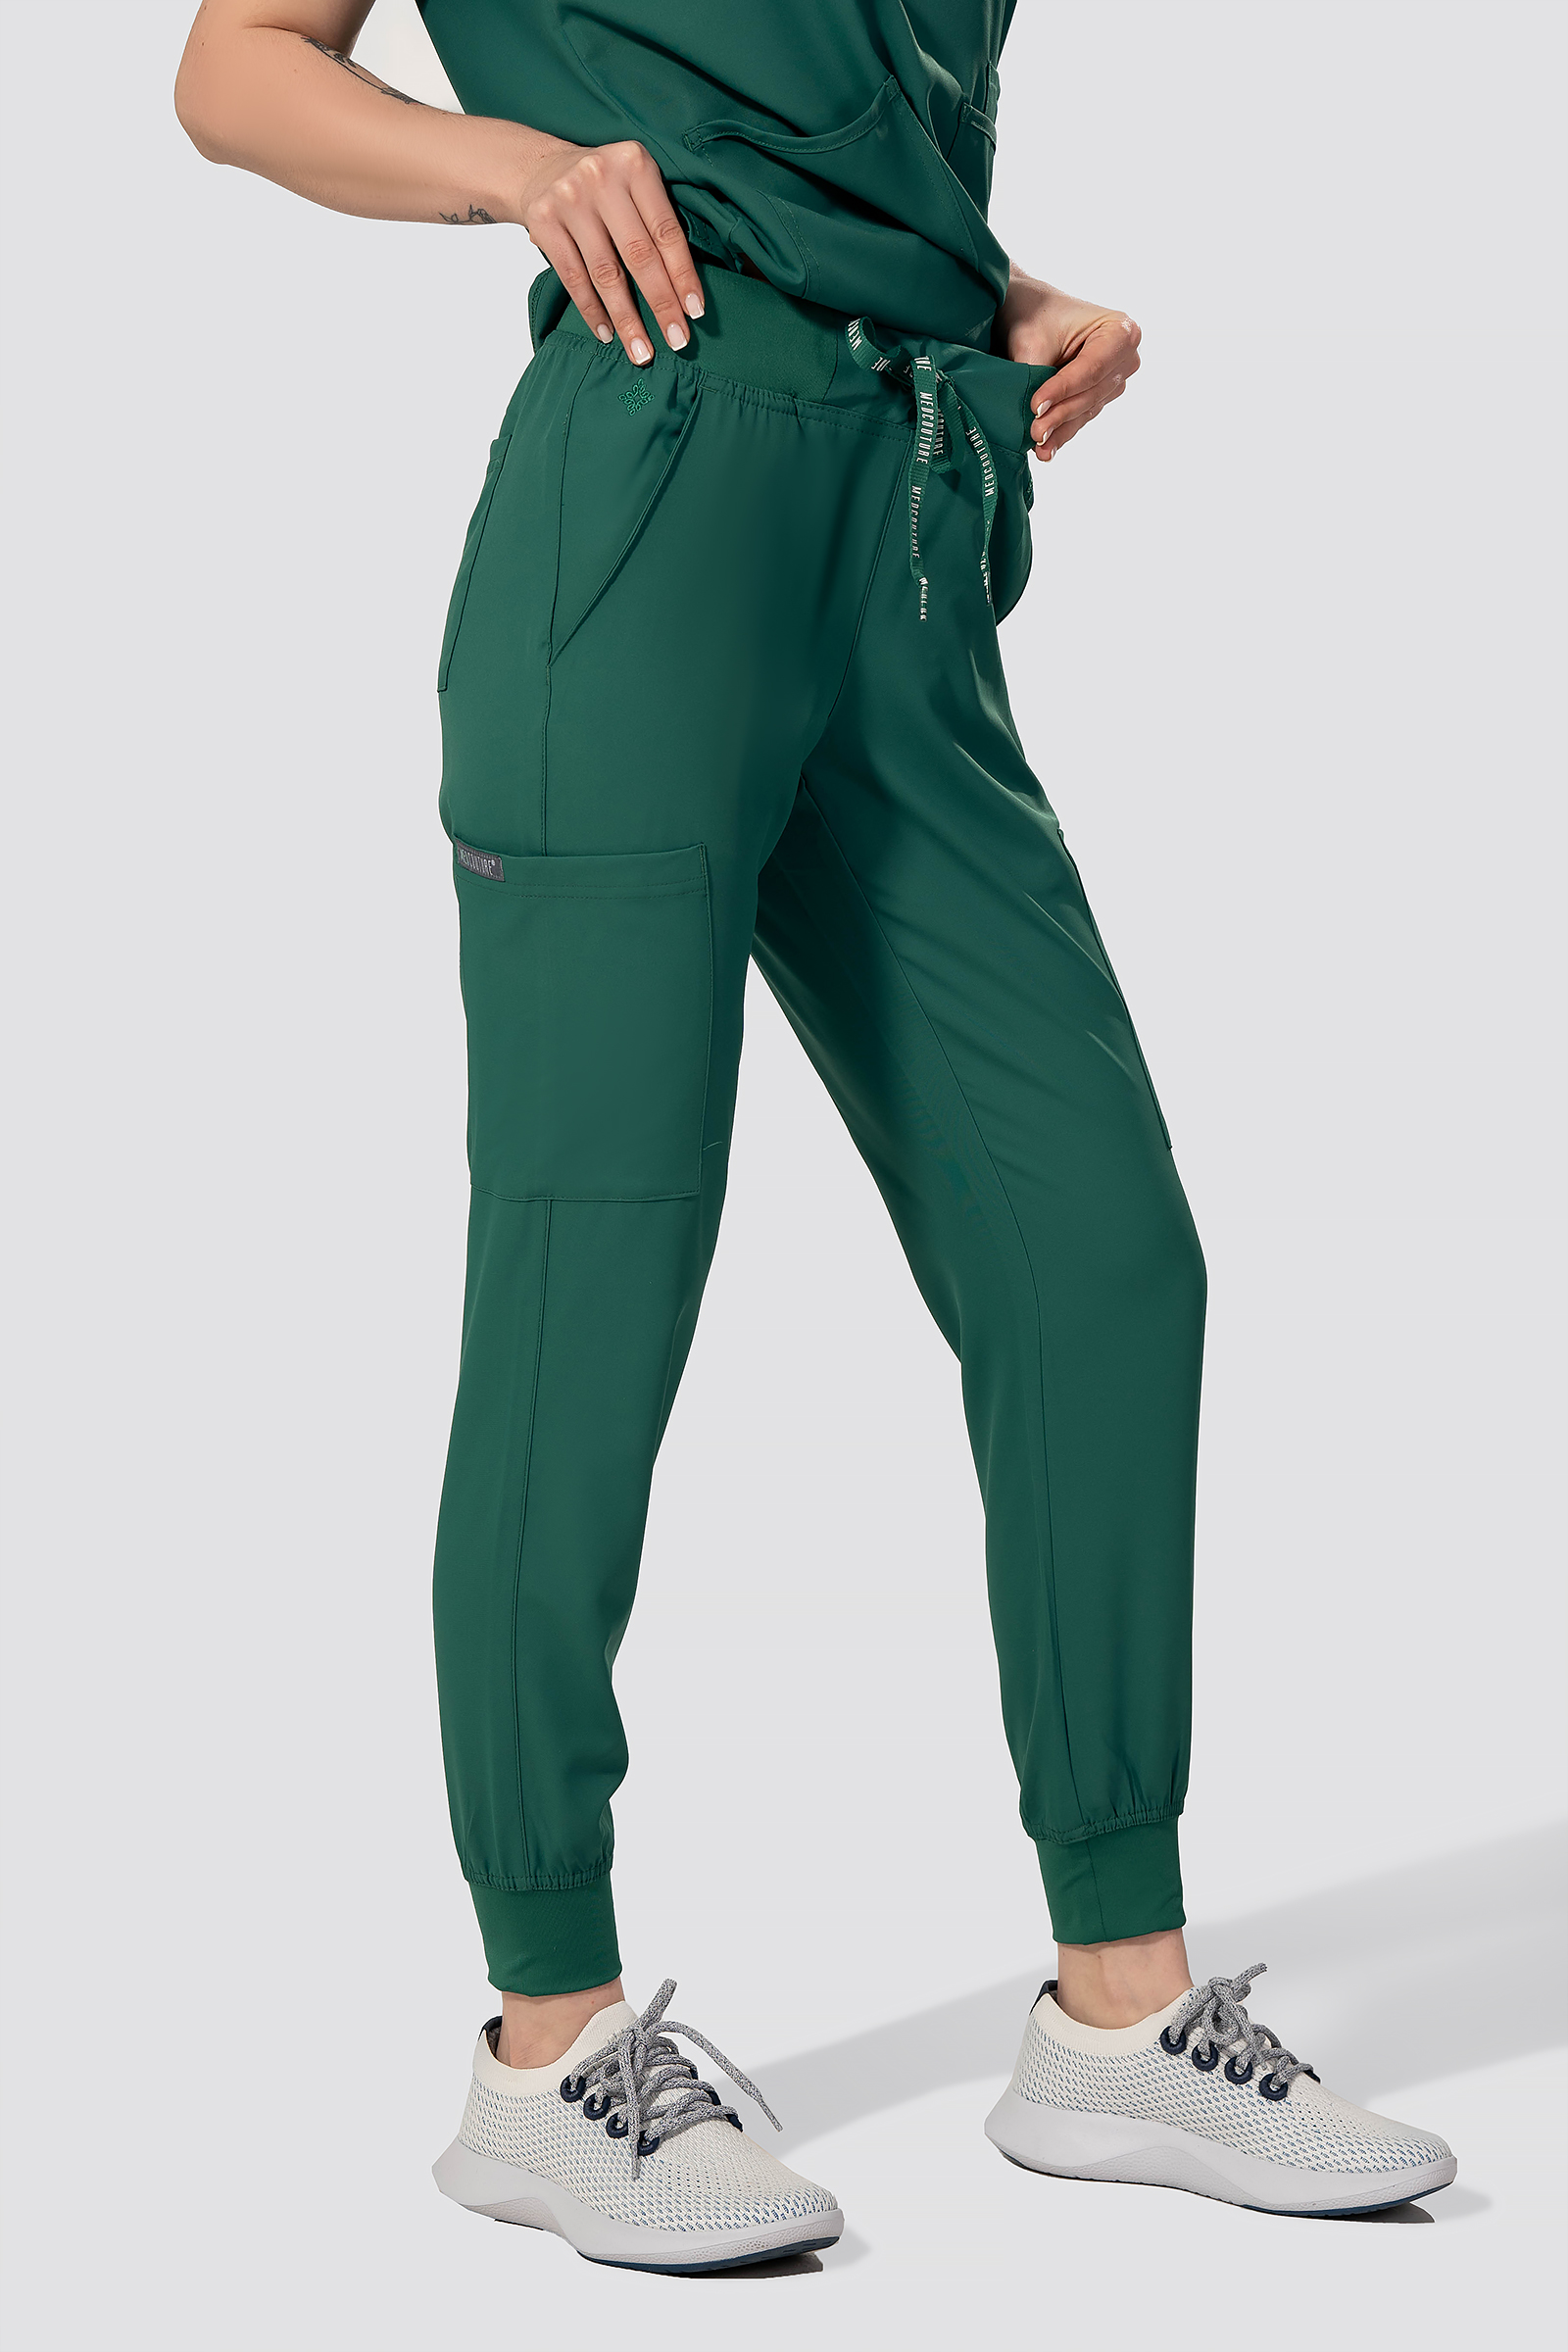 Spodnie medyczne damskie, joggery Uniformix FLEX ZONE, FZ2056, morski  morski / spodnie i spódnice medyczne / Sklep internetowy